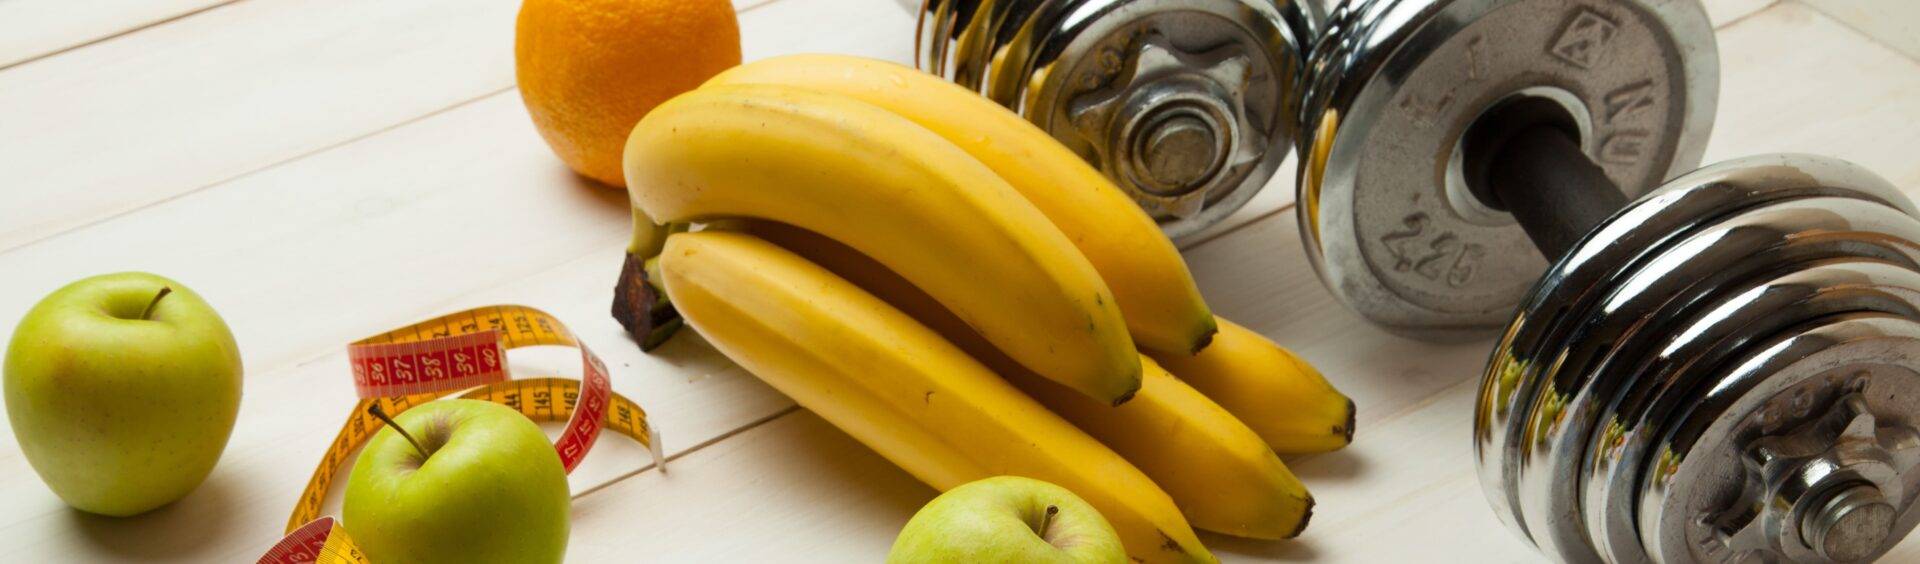 frutas para ganhar massa muscular